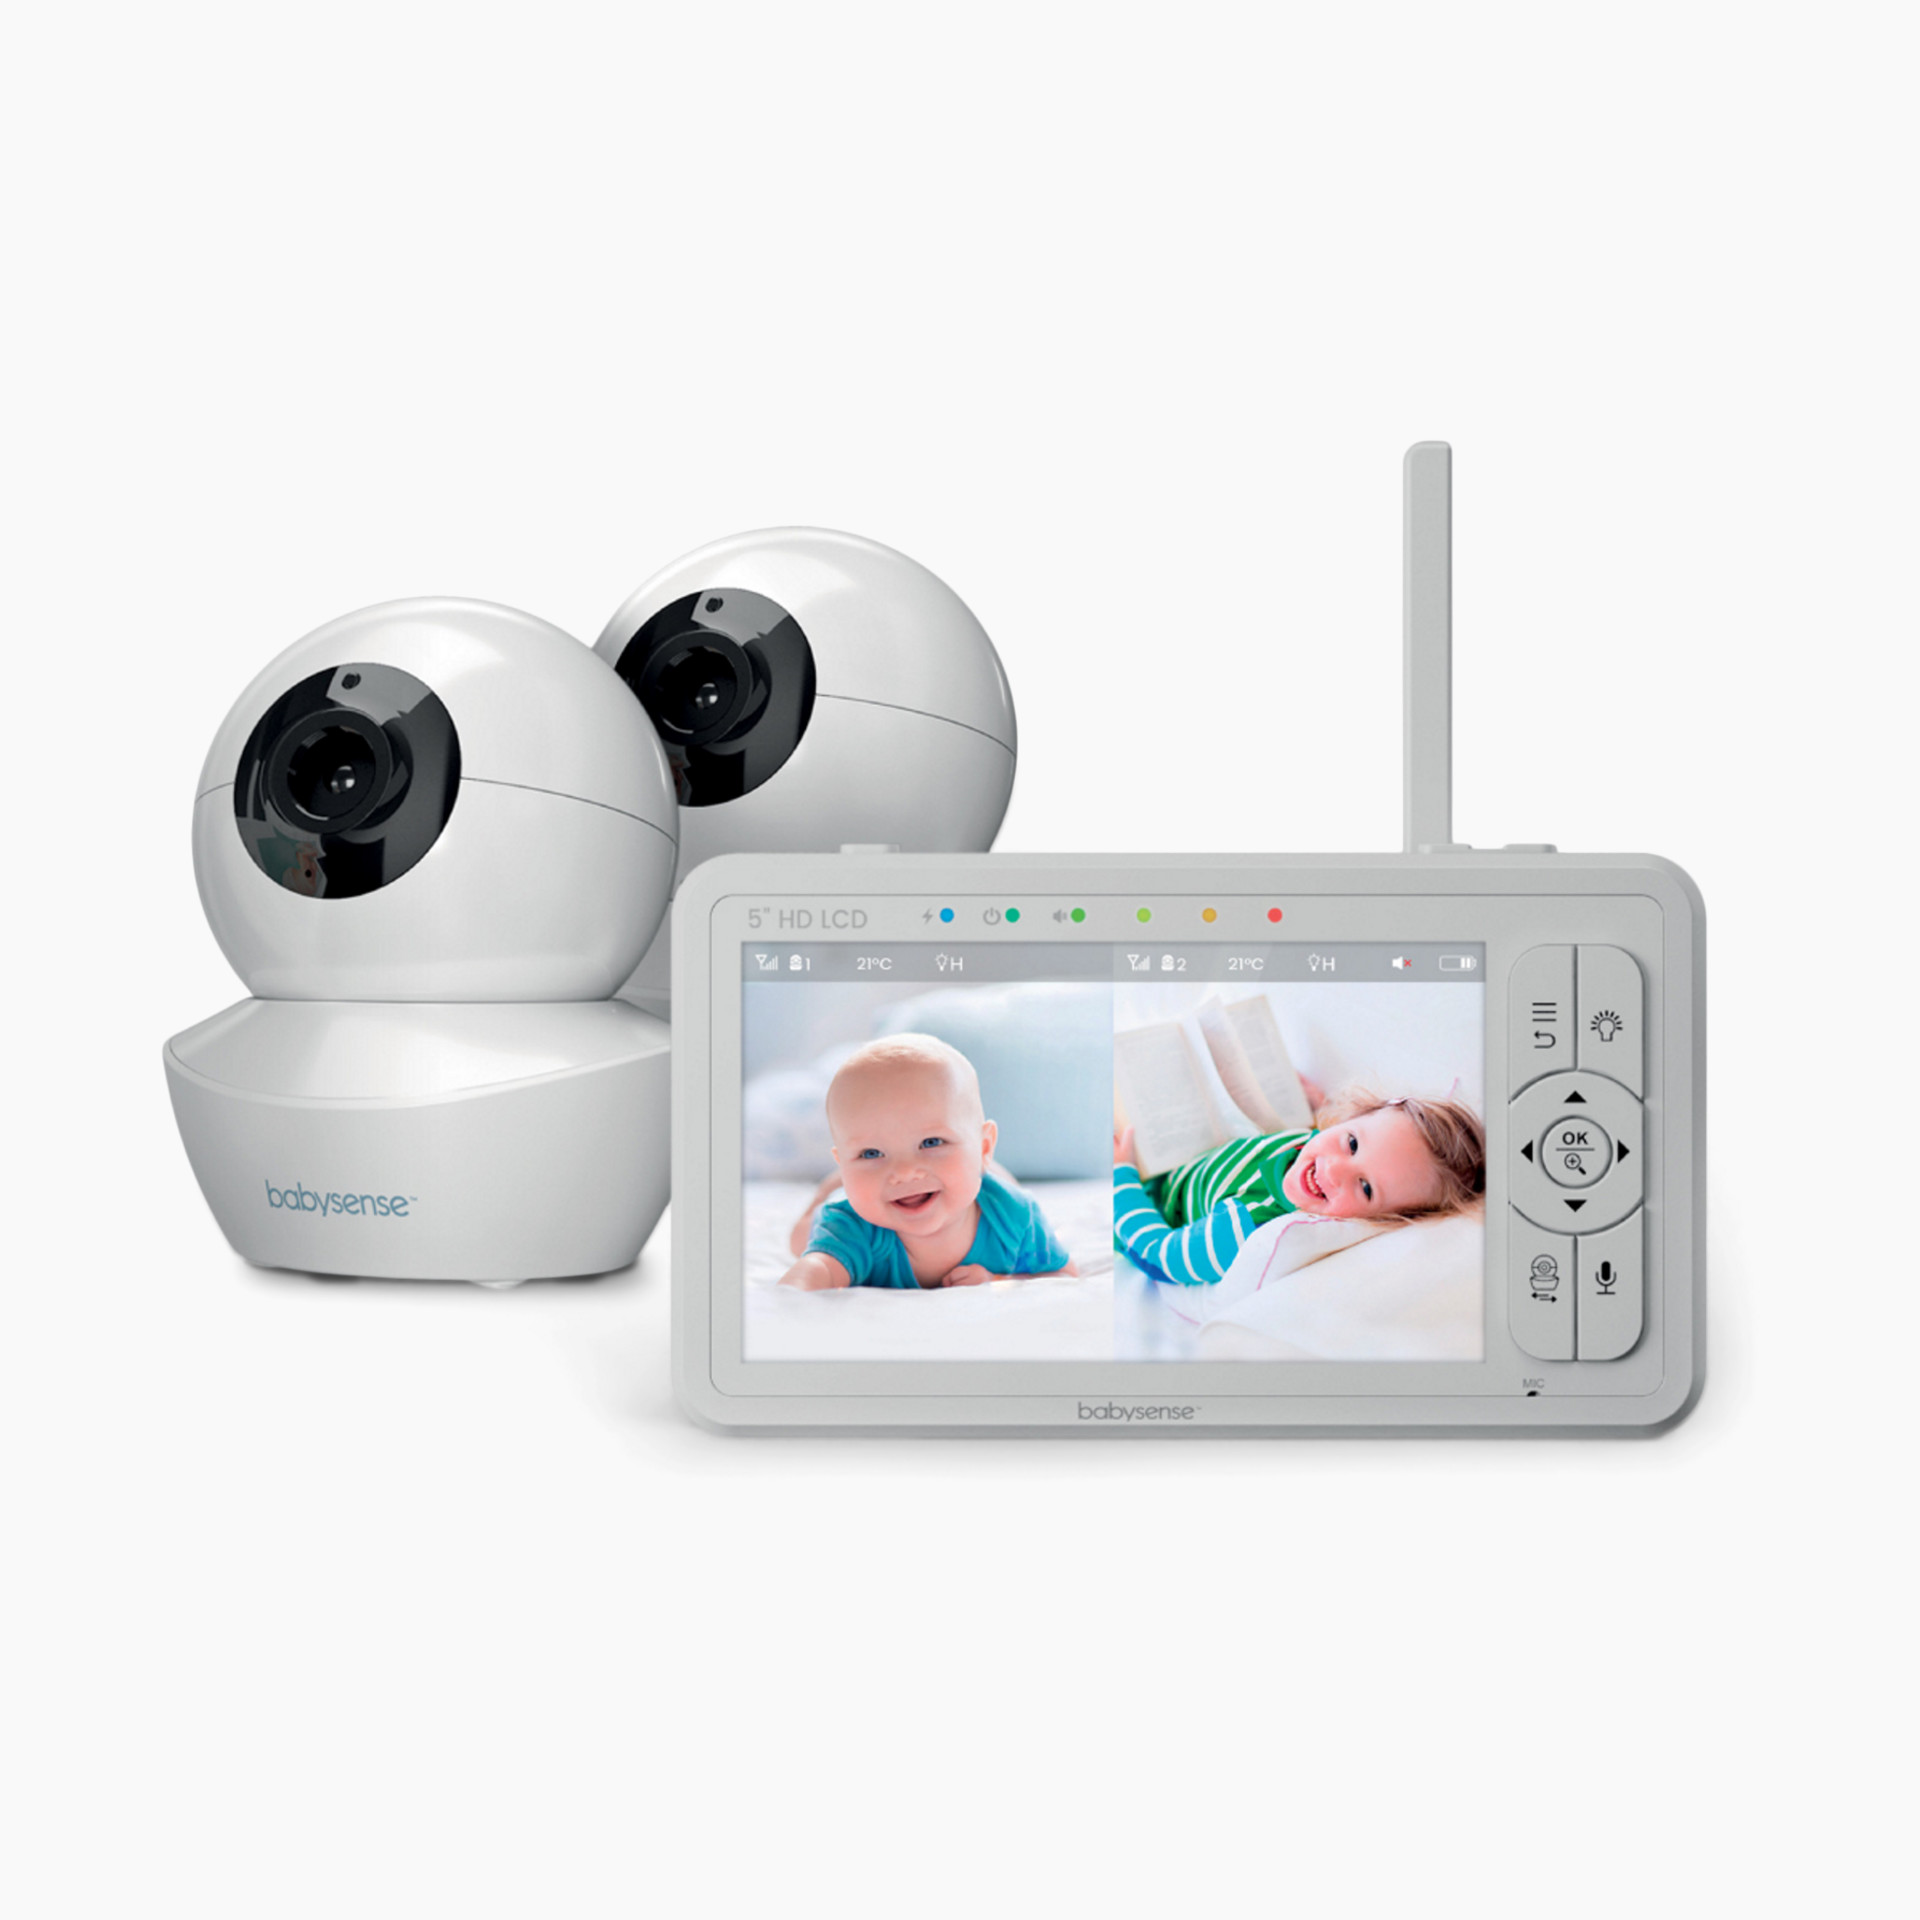 5 Baby Camera Monitor, Hello Baby Monitor with Cameras and Audio